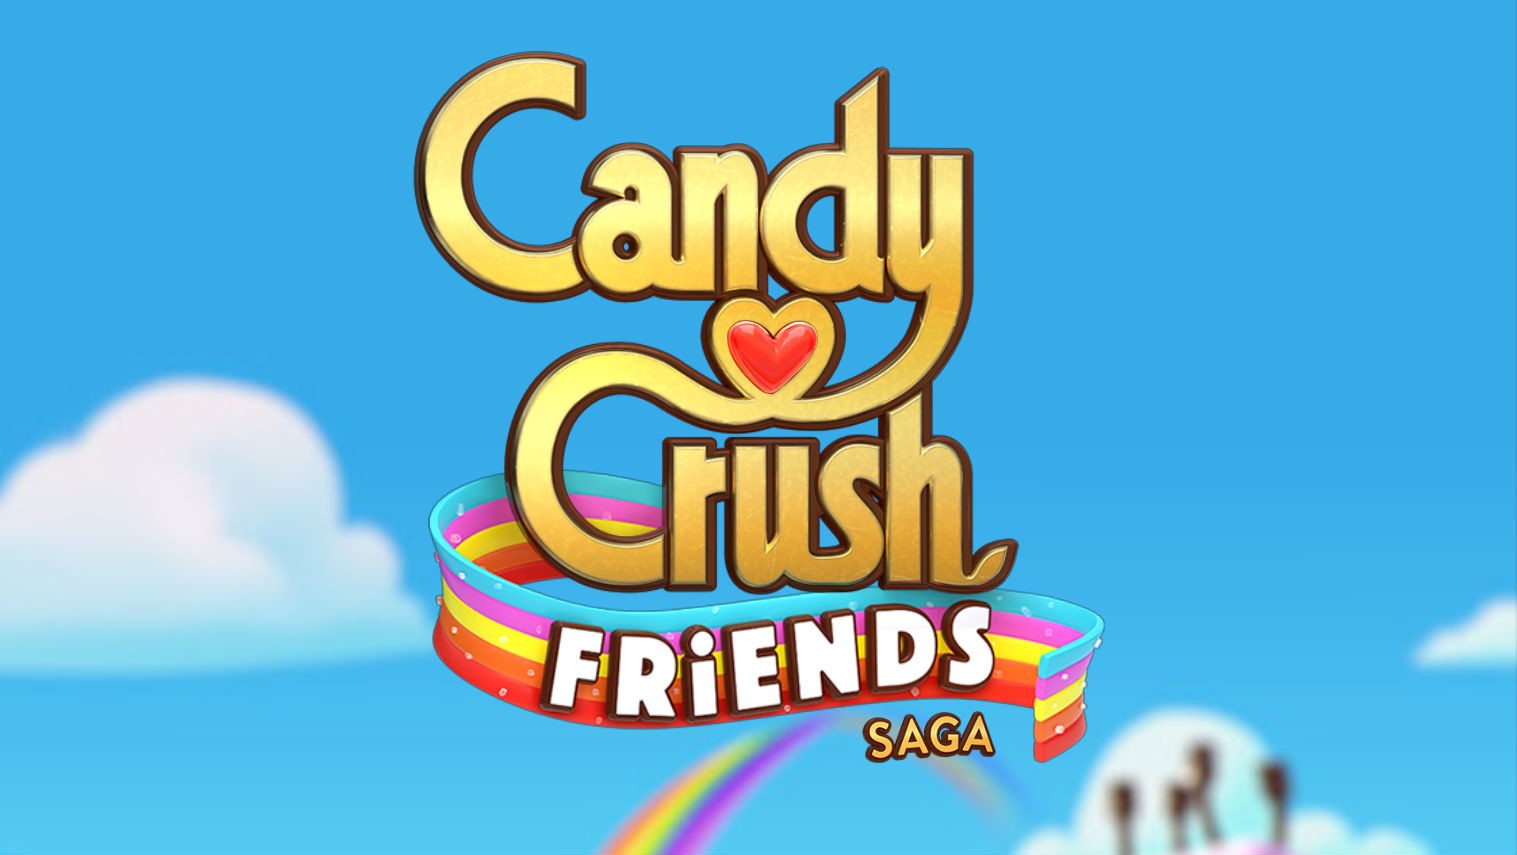 Candy Crush Friends Saga On Facebook